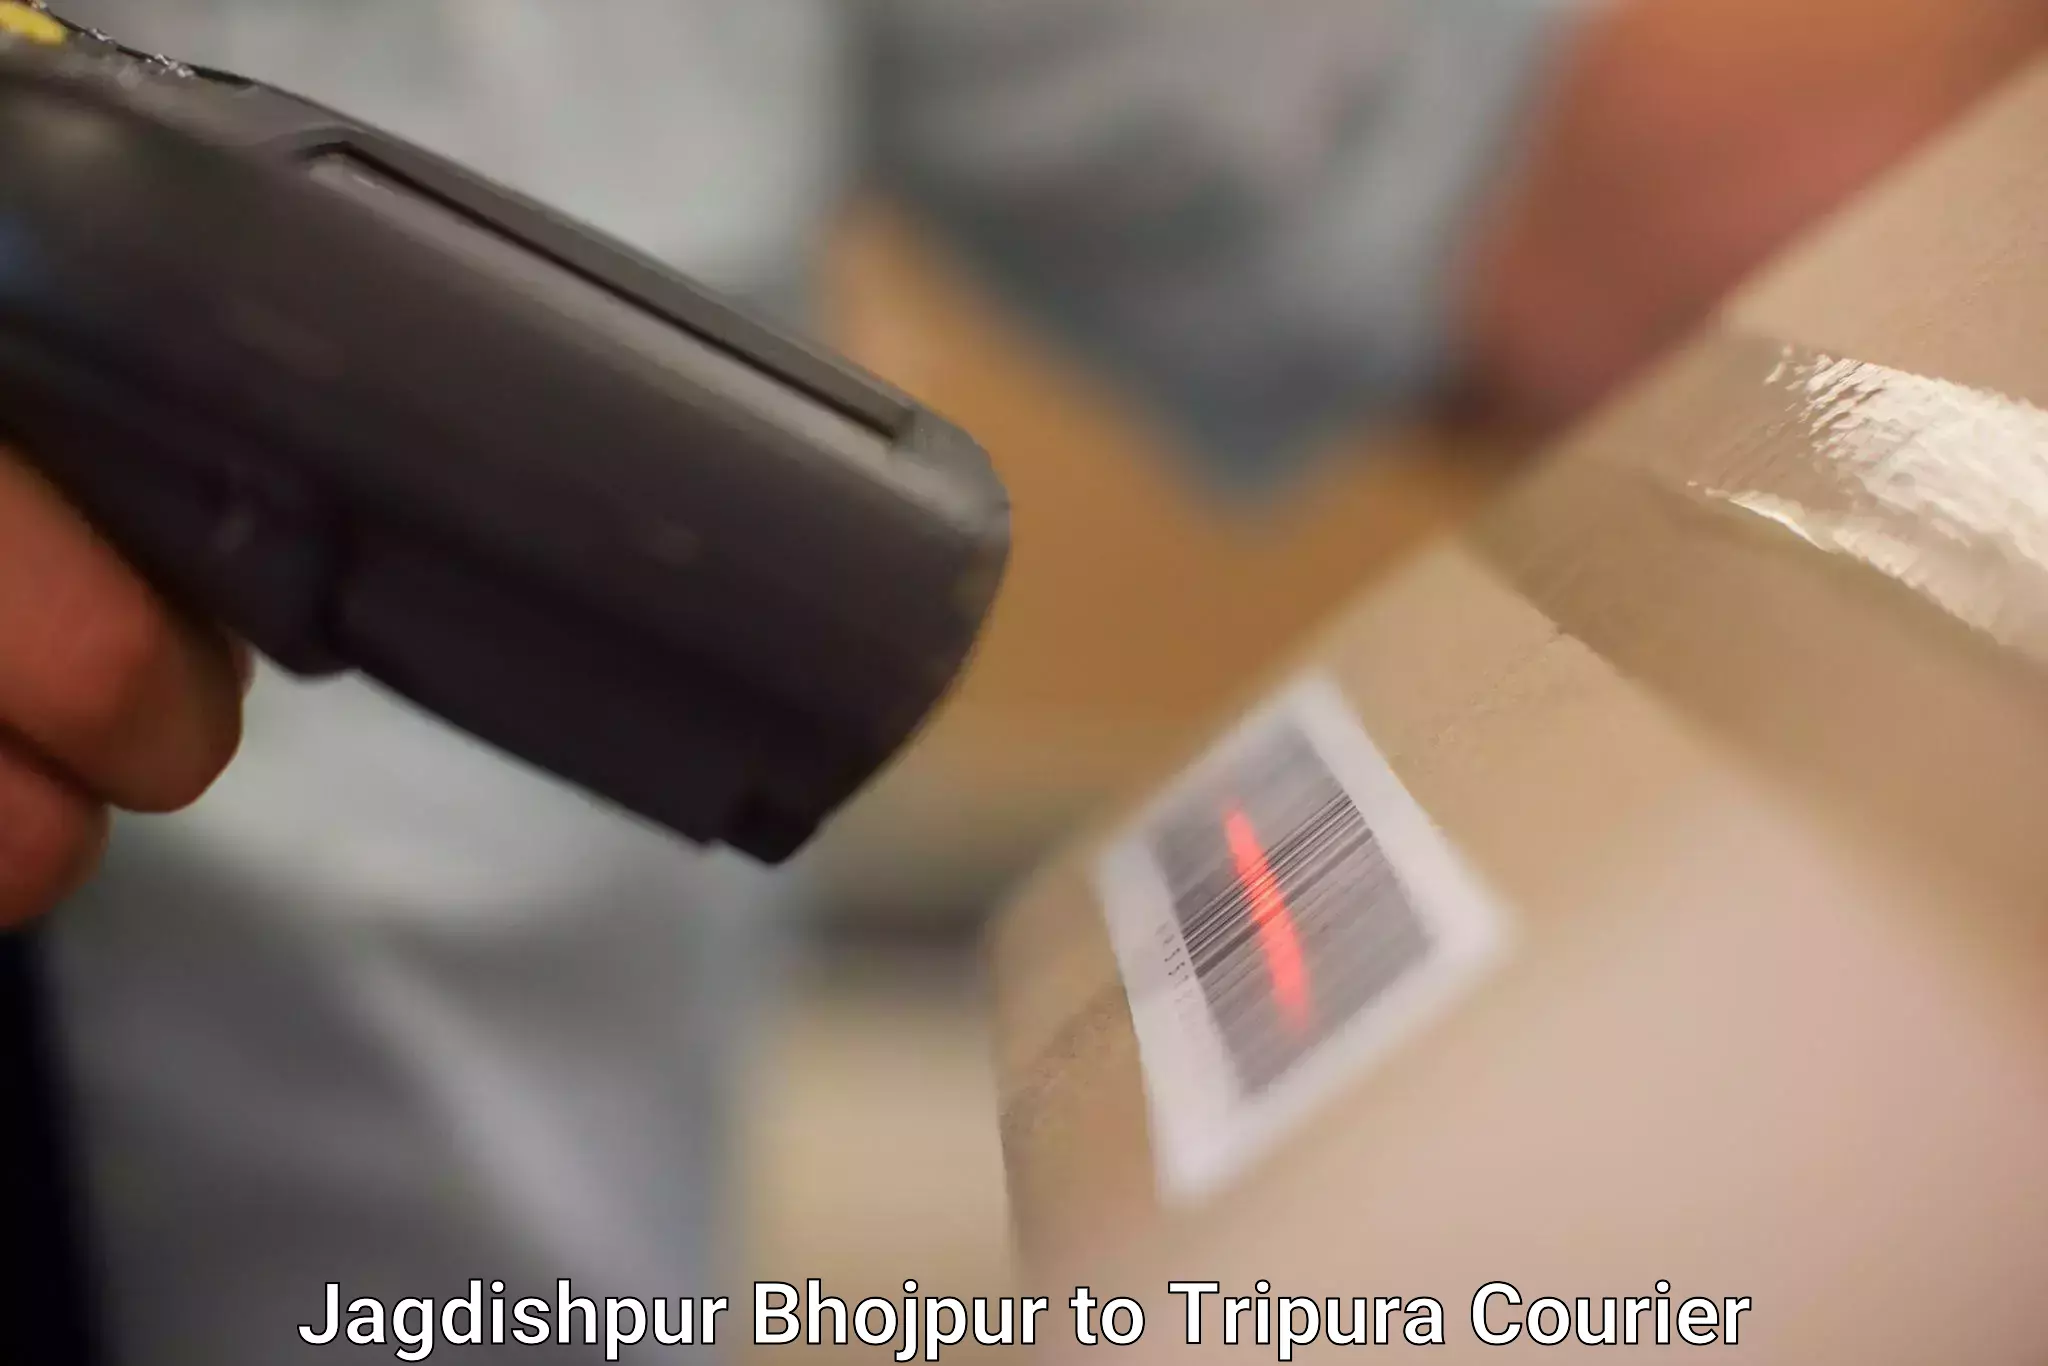 Courier service efficiency Jagdishpur Bhojpur to Dharmanagar